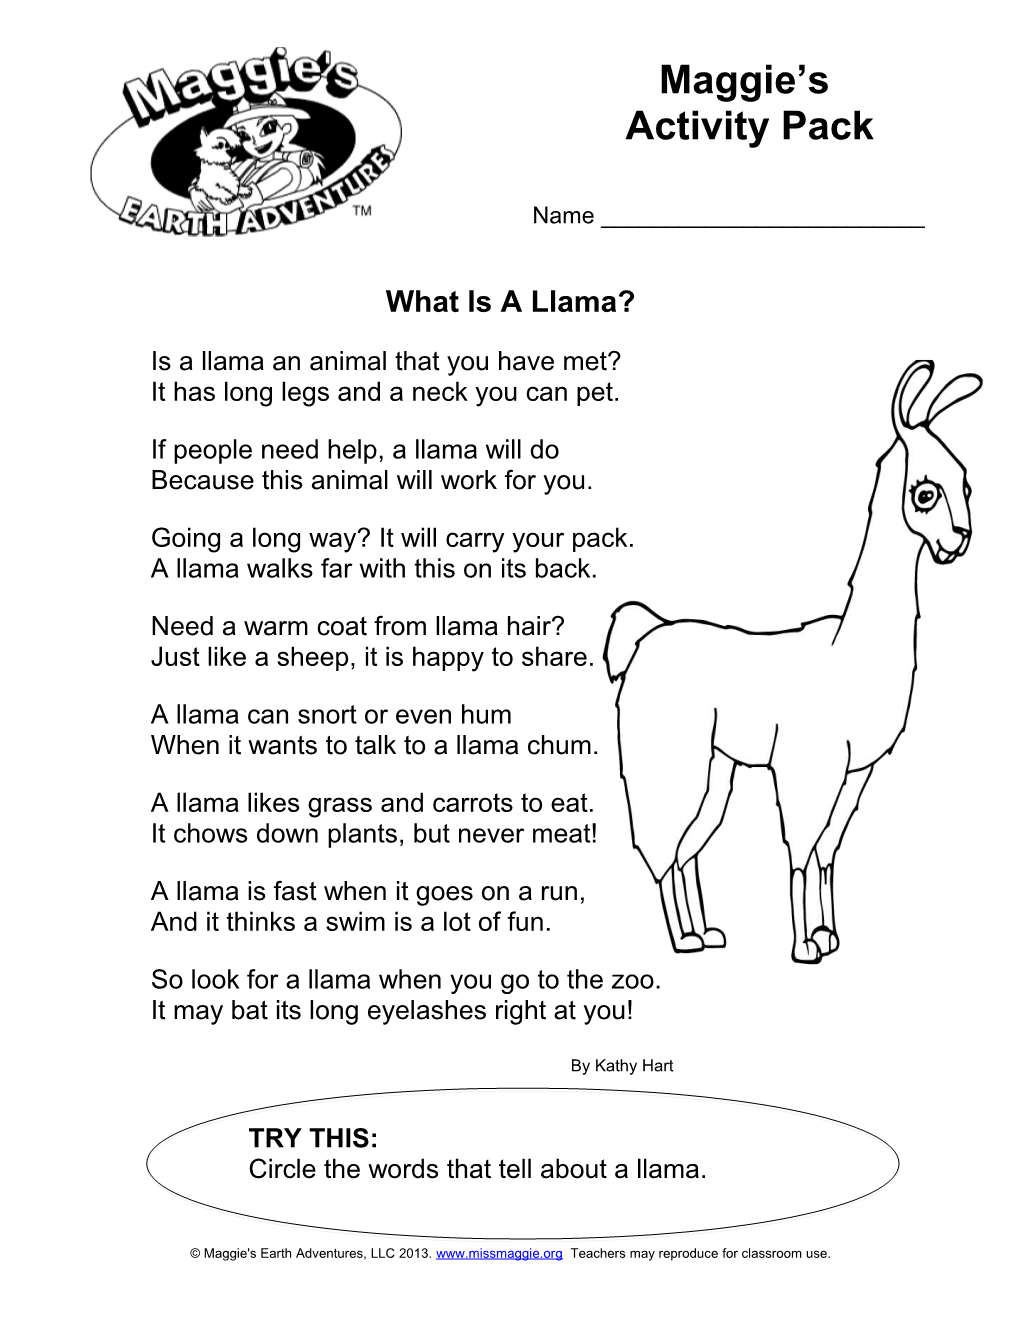 What Is a Llama?